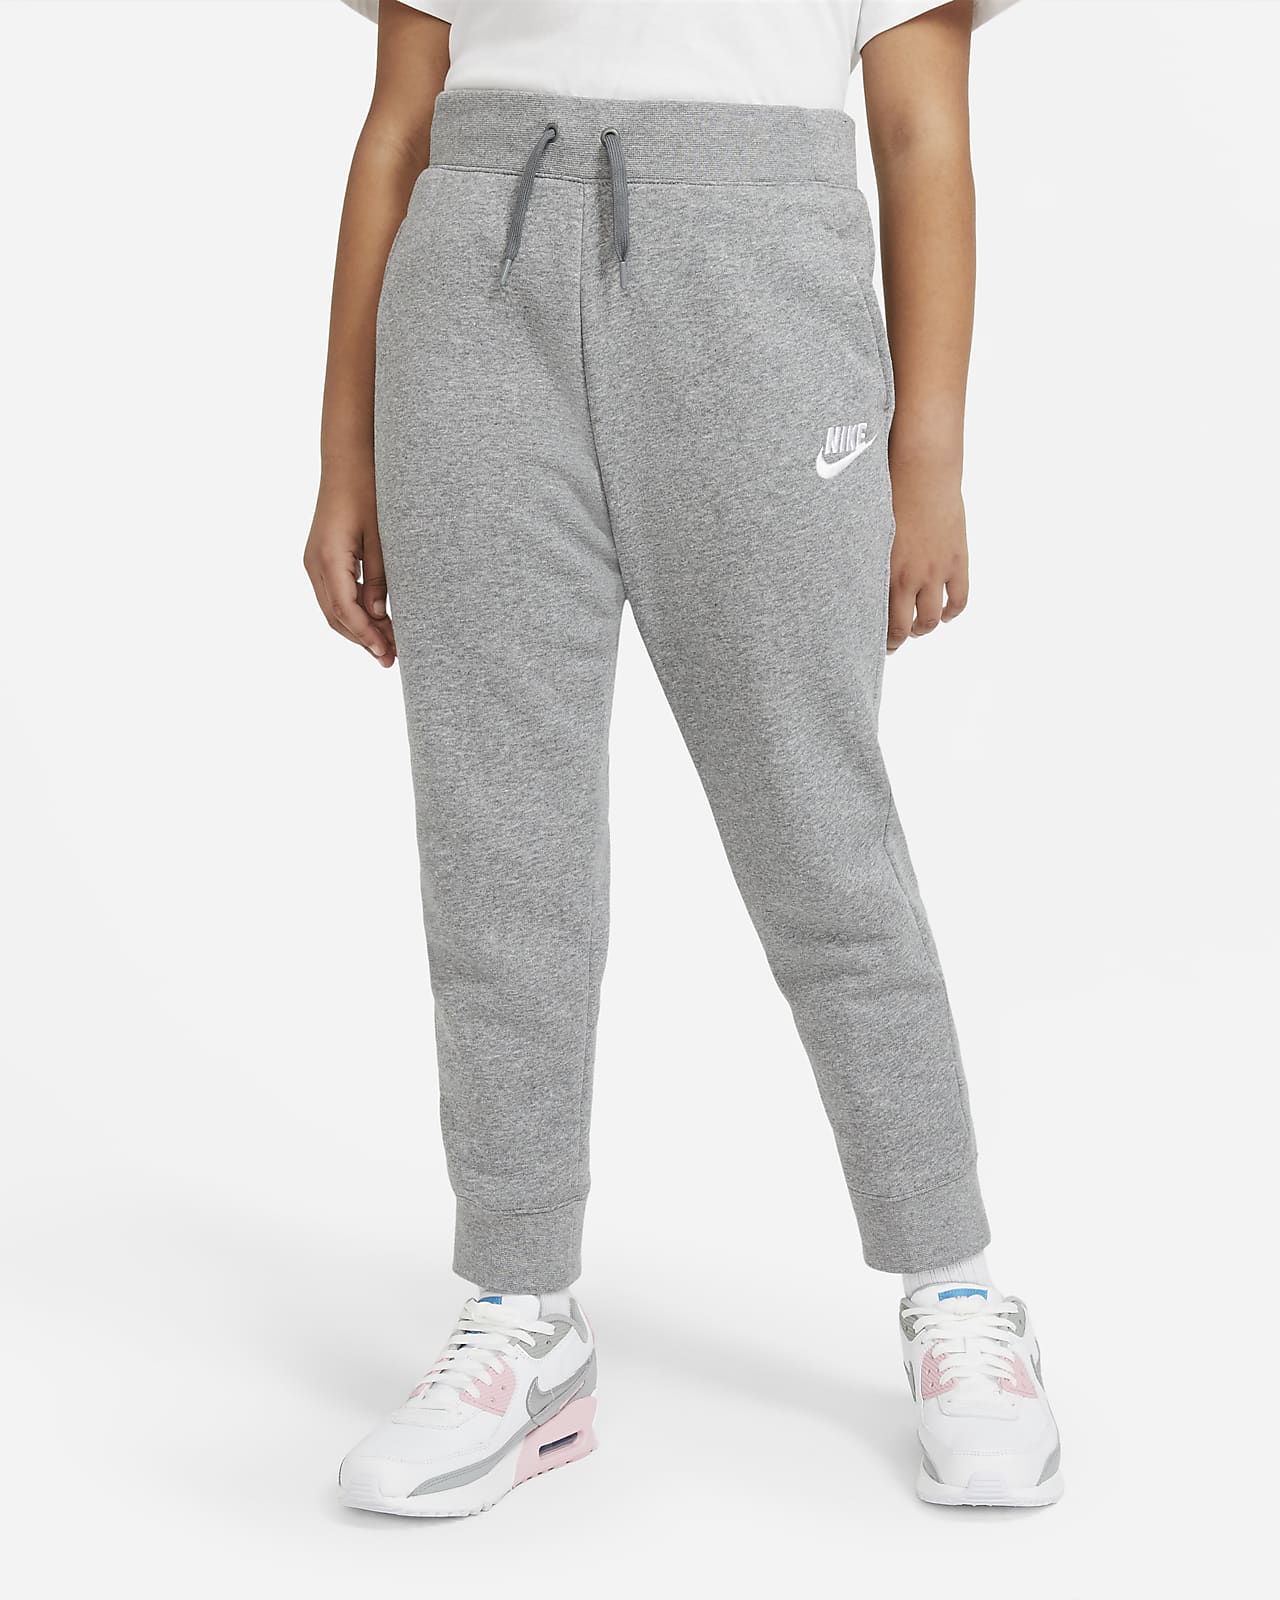 grey nike sweatpants for girls